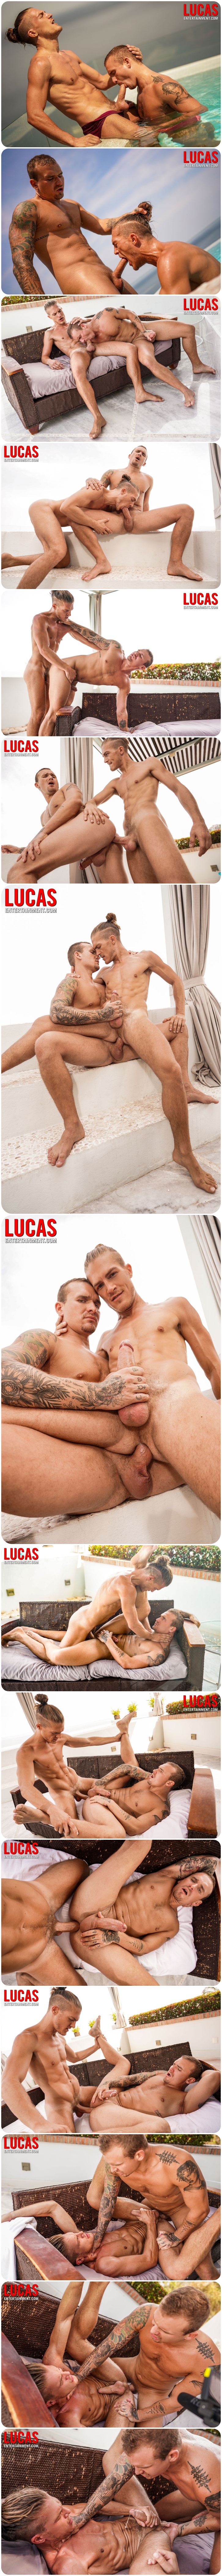 Lucas Entertainment, Kosta Viking, Isaac X